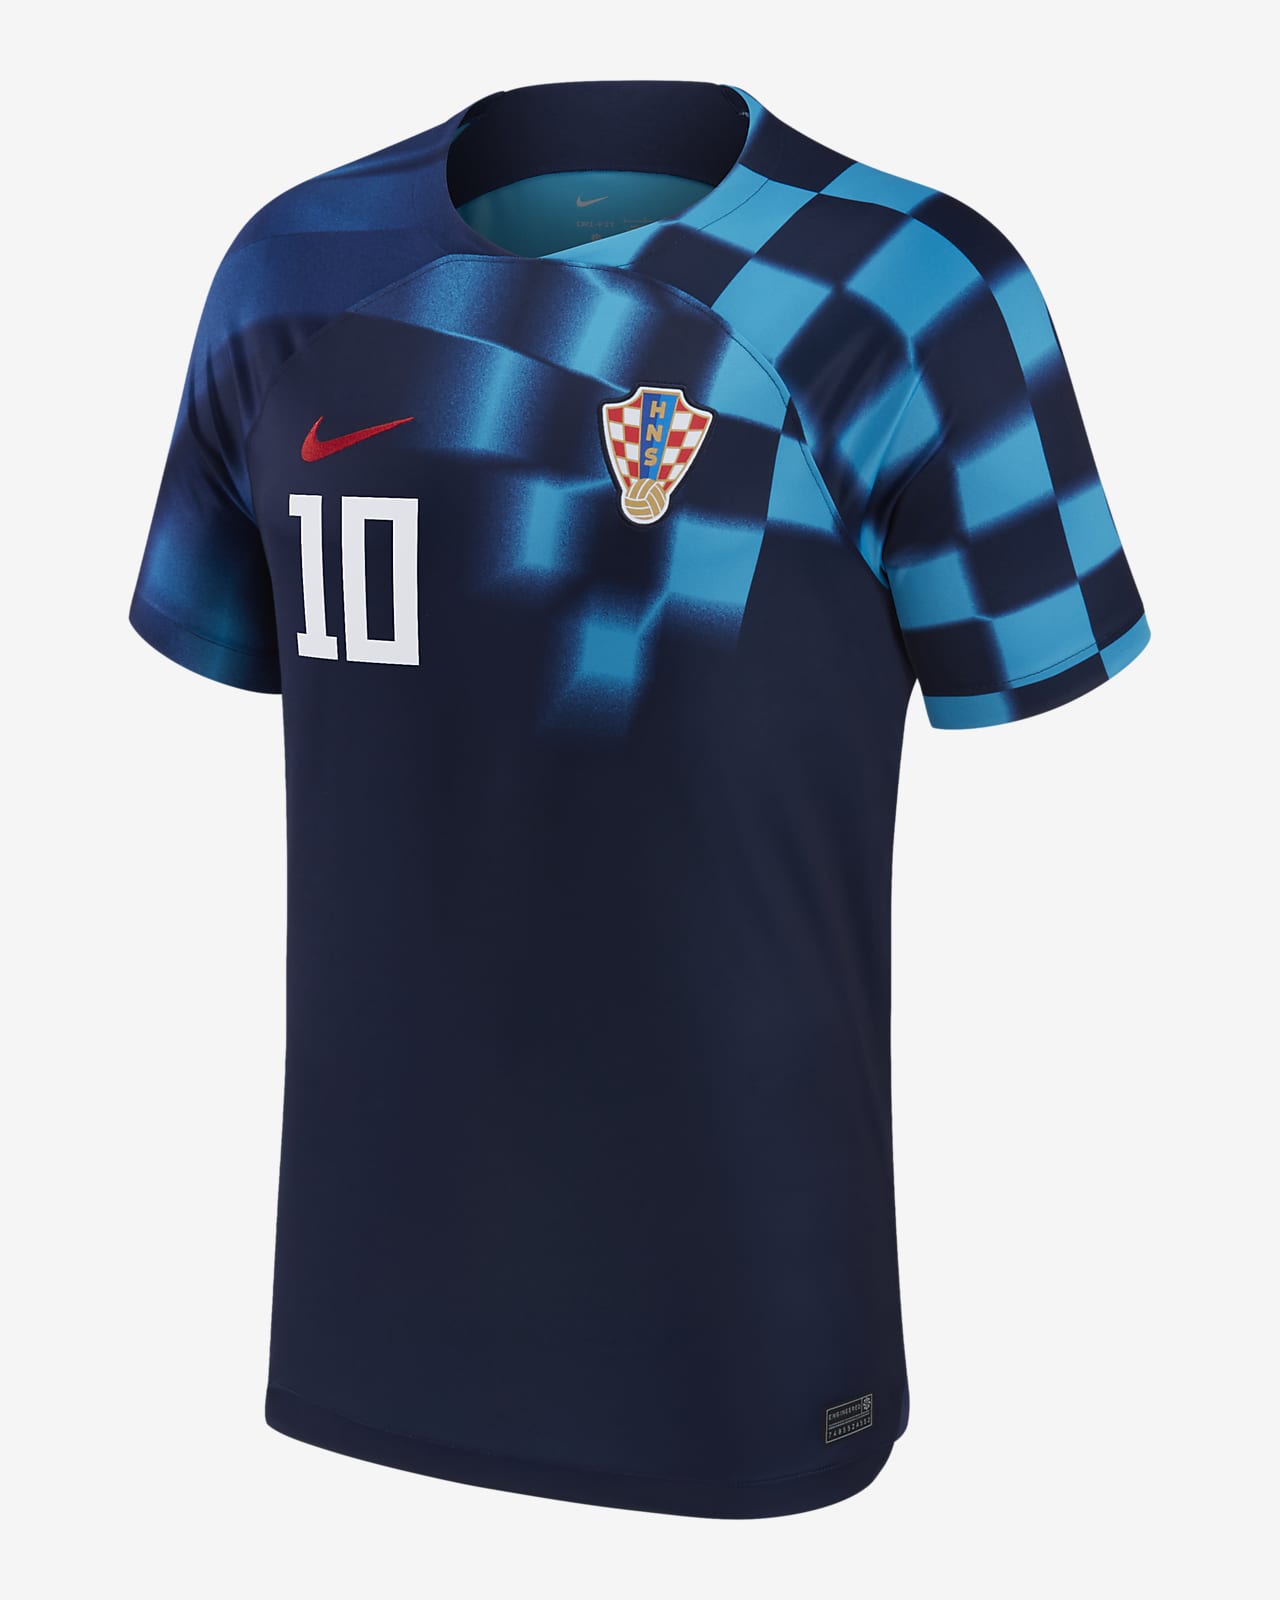 Croatia National Team 2022/23 Stadium Away (Luka Modrić) Men's Nike Dri-FIT Soccer Jersey